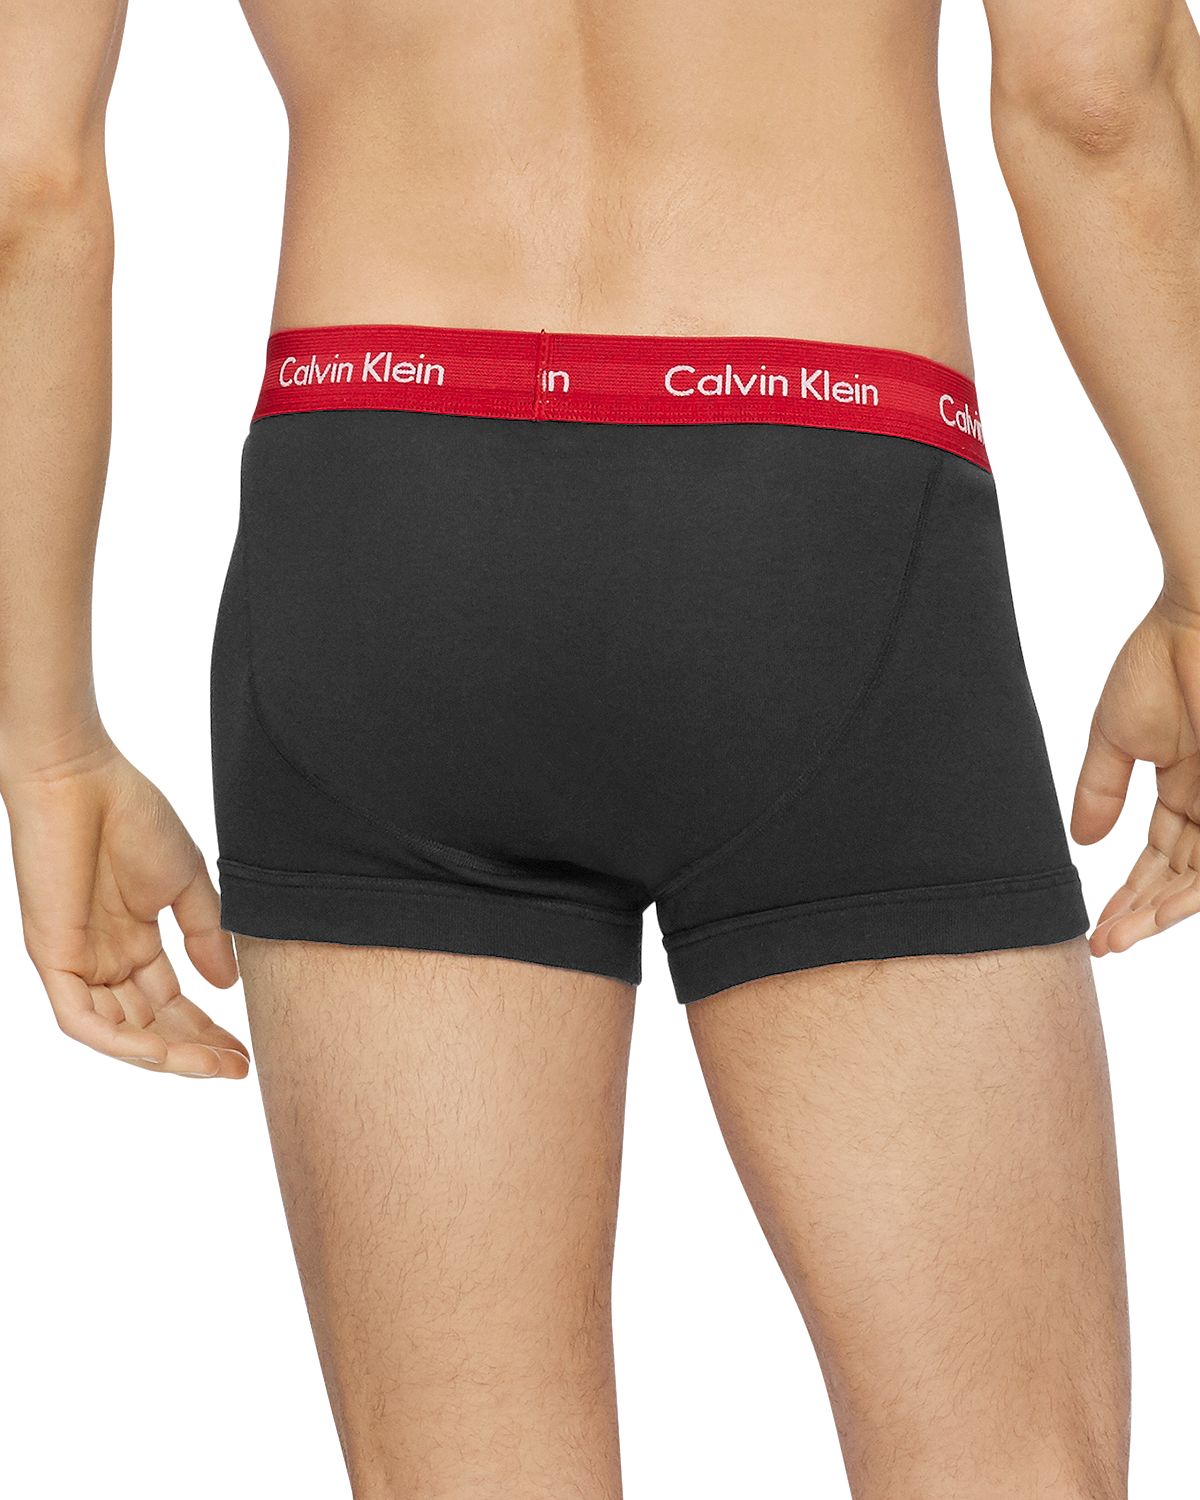 Calvin Klein Cotton Classic Boxer Briefs Pack Of 5 Black Multi